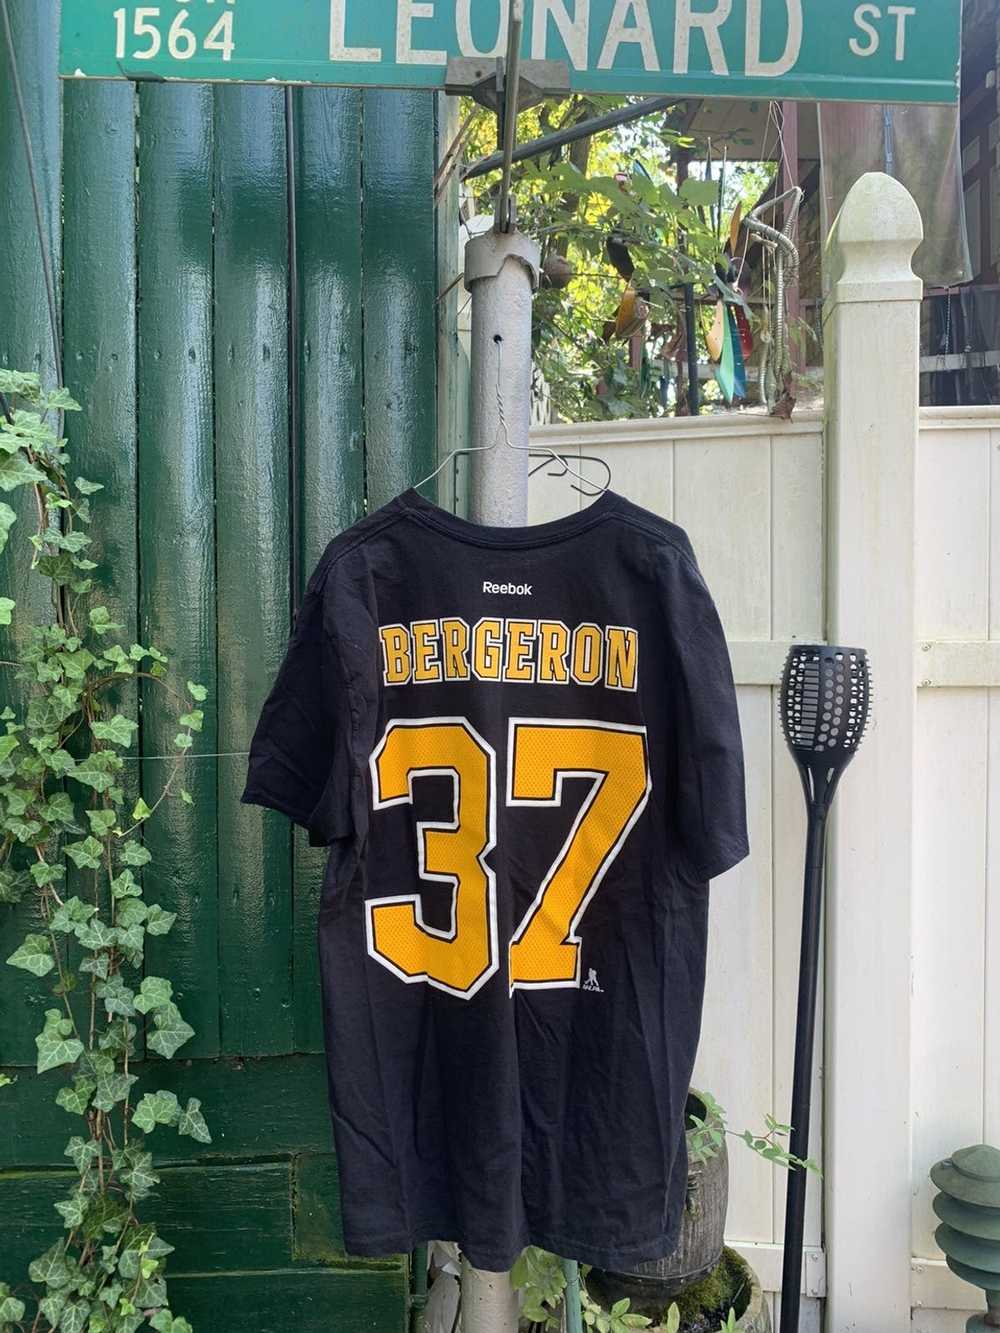 Patrice Bergeron Jerseys, Patrice Bergeron T-Shirts, Gear